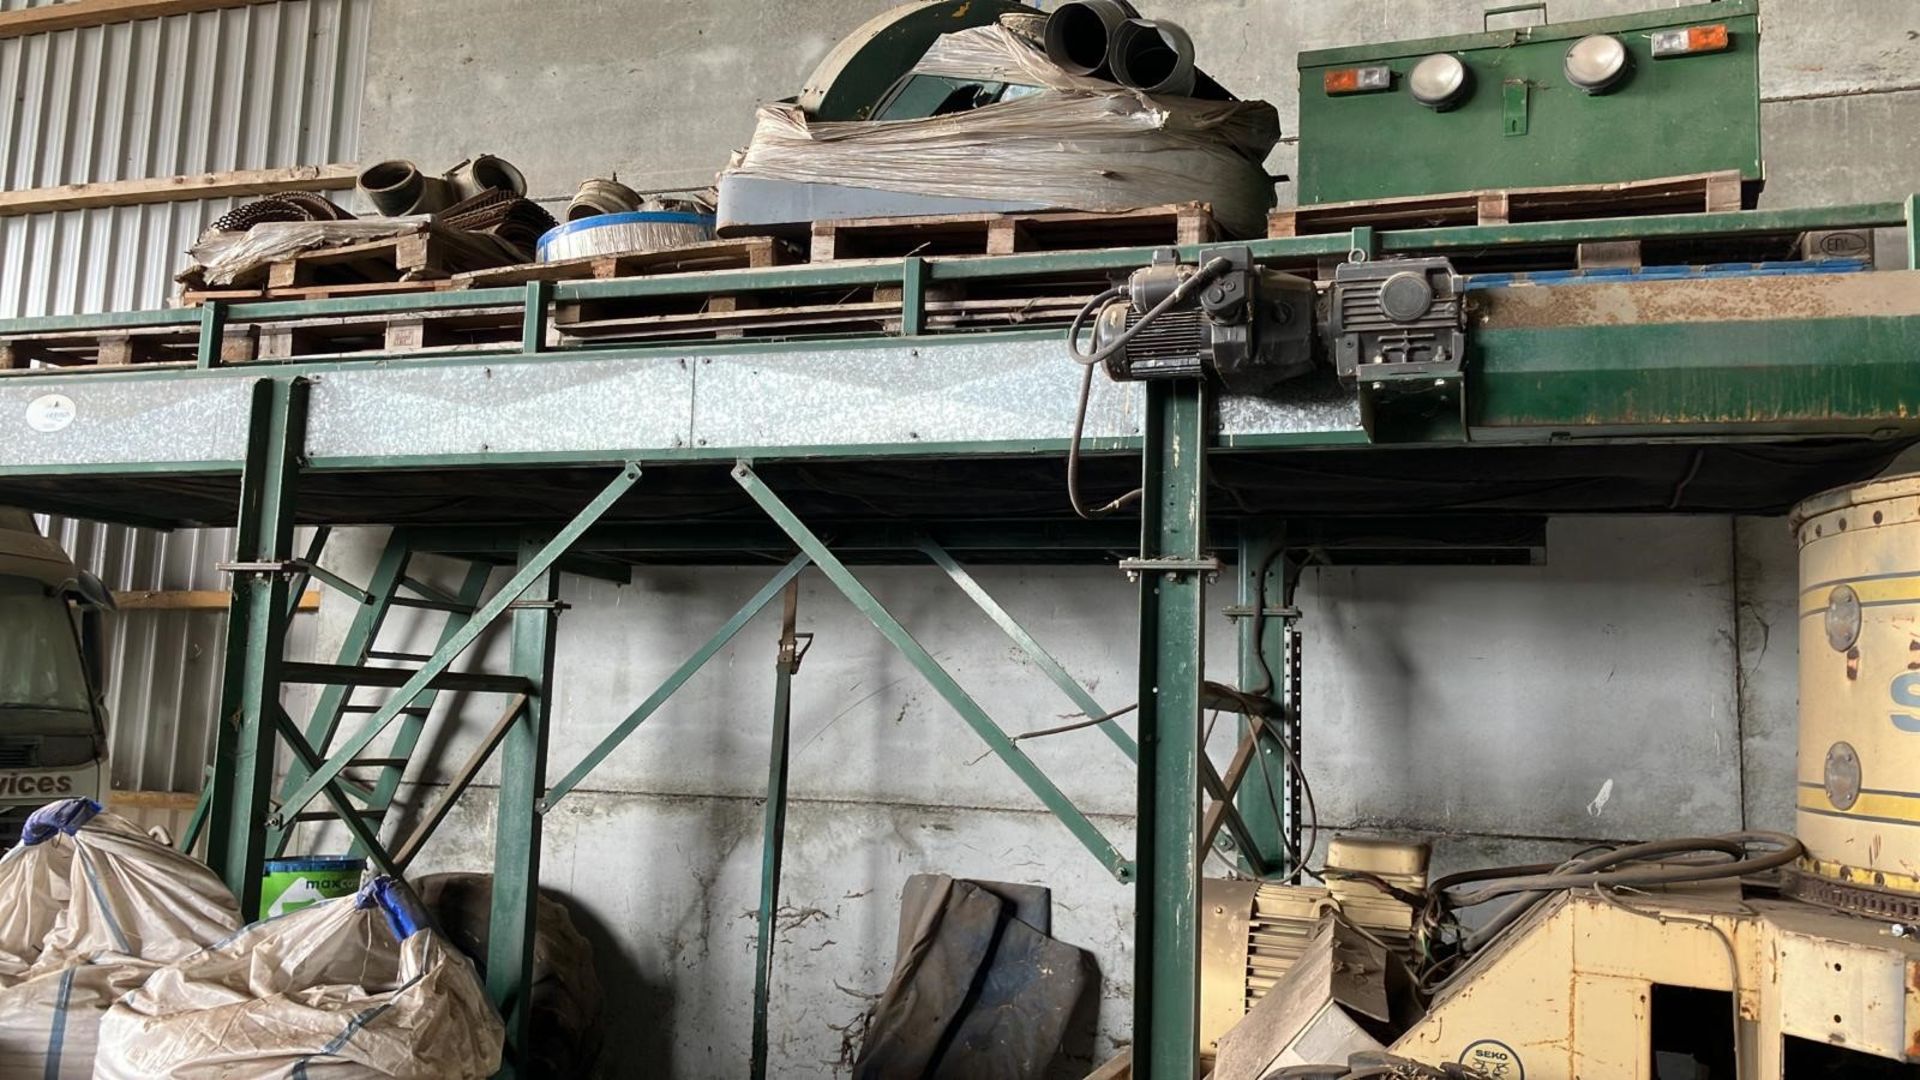 Bale Conveyor -1.25 metre wide straw bale conveyor on supporting steelwork. The conveyor is 6 metres